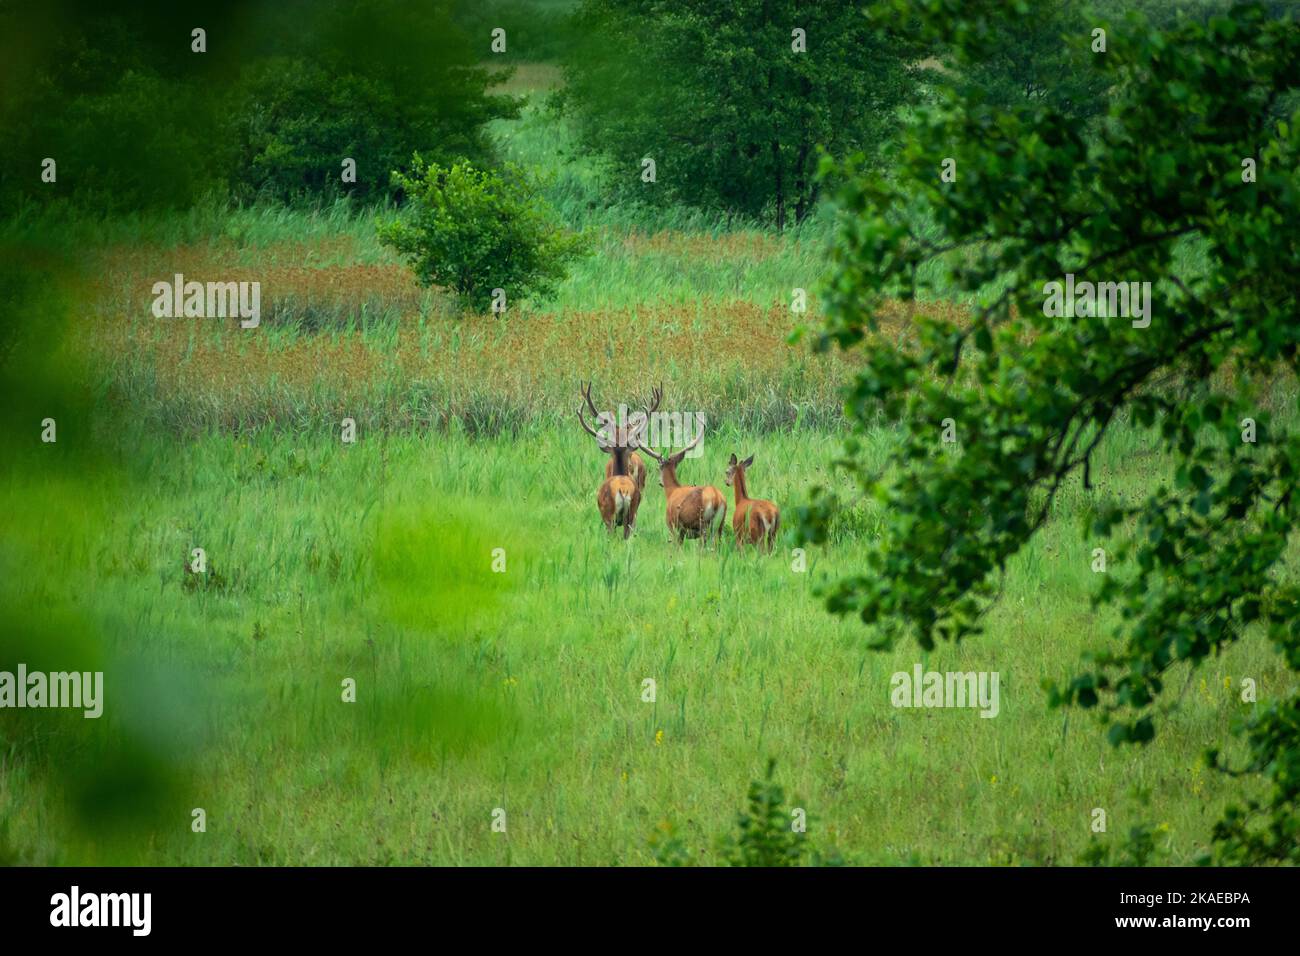 Four deer walking through tall grass on a green meadow Stock Photo